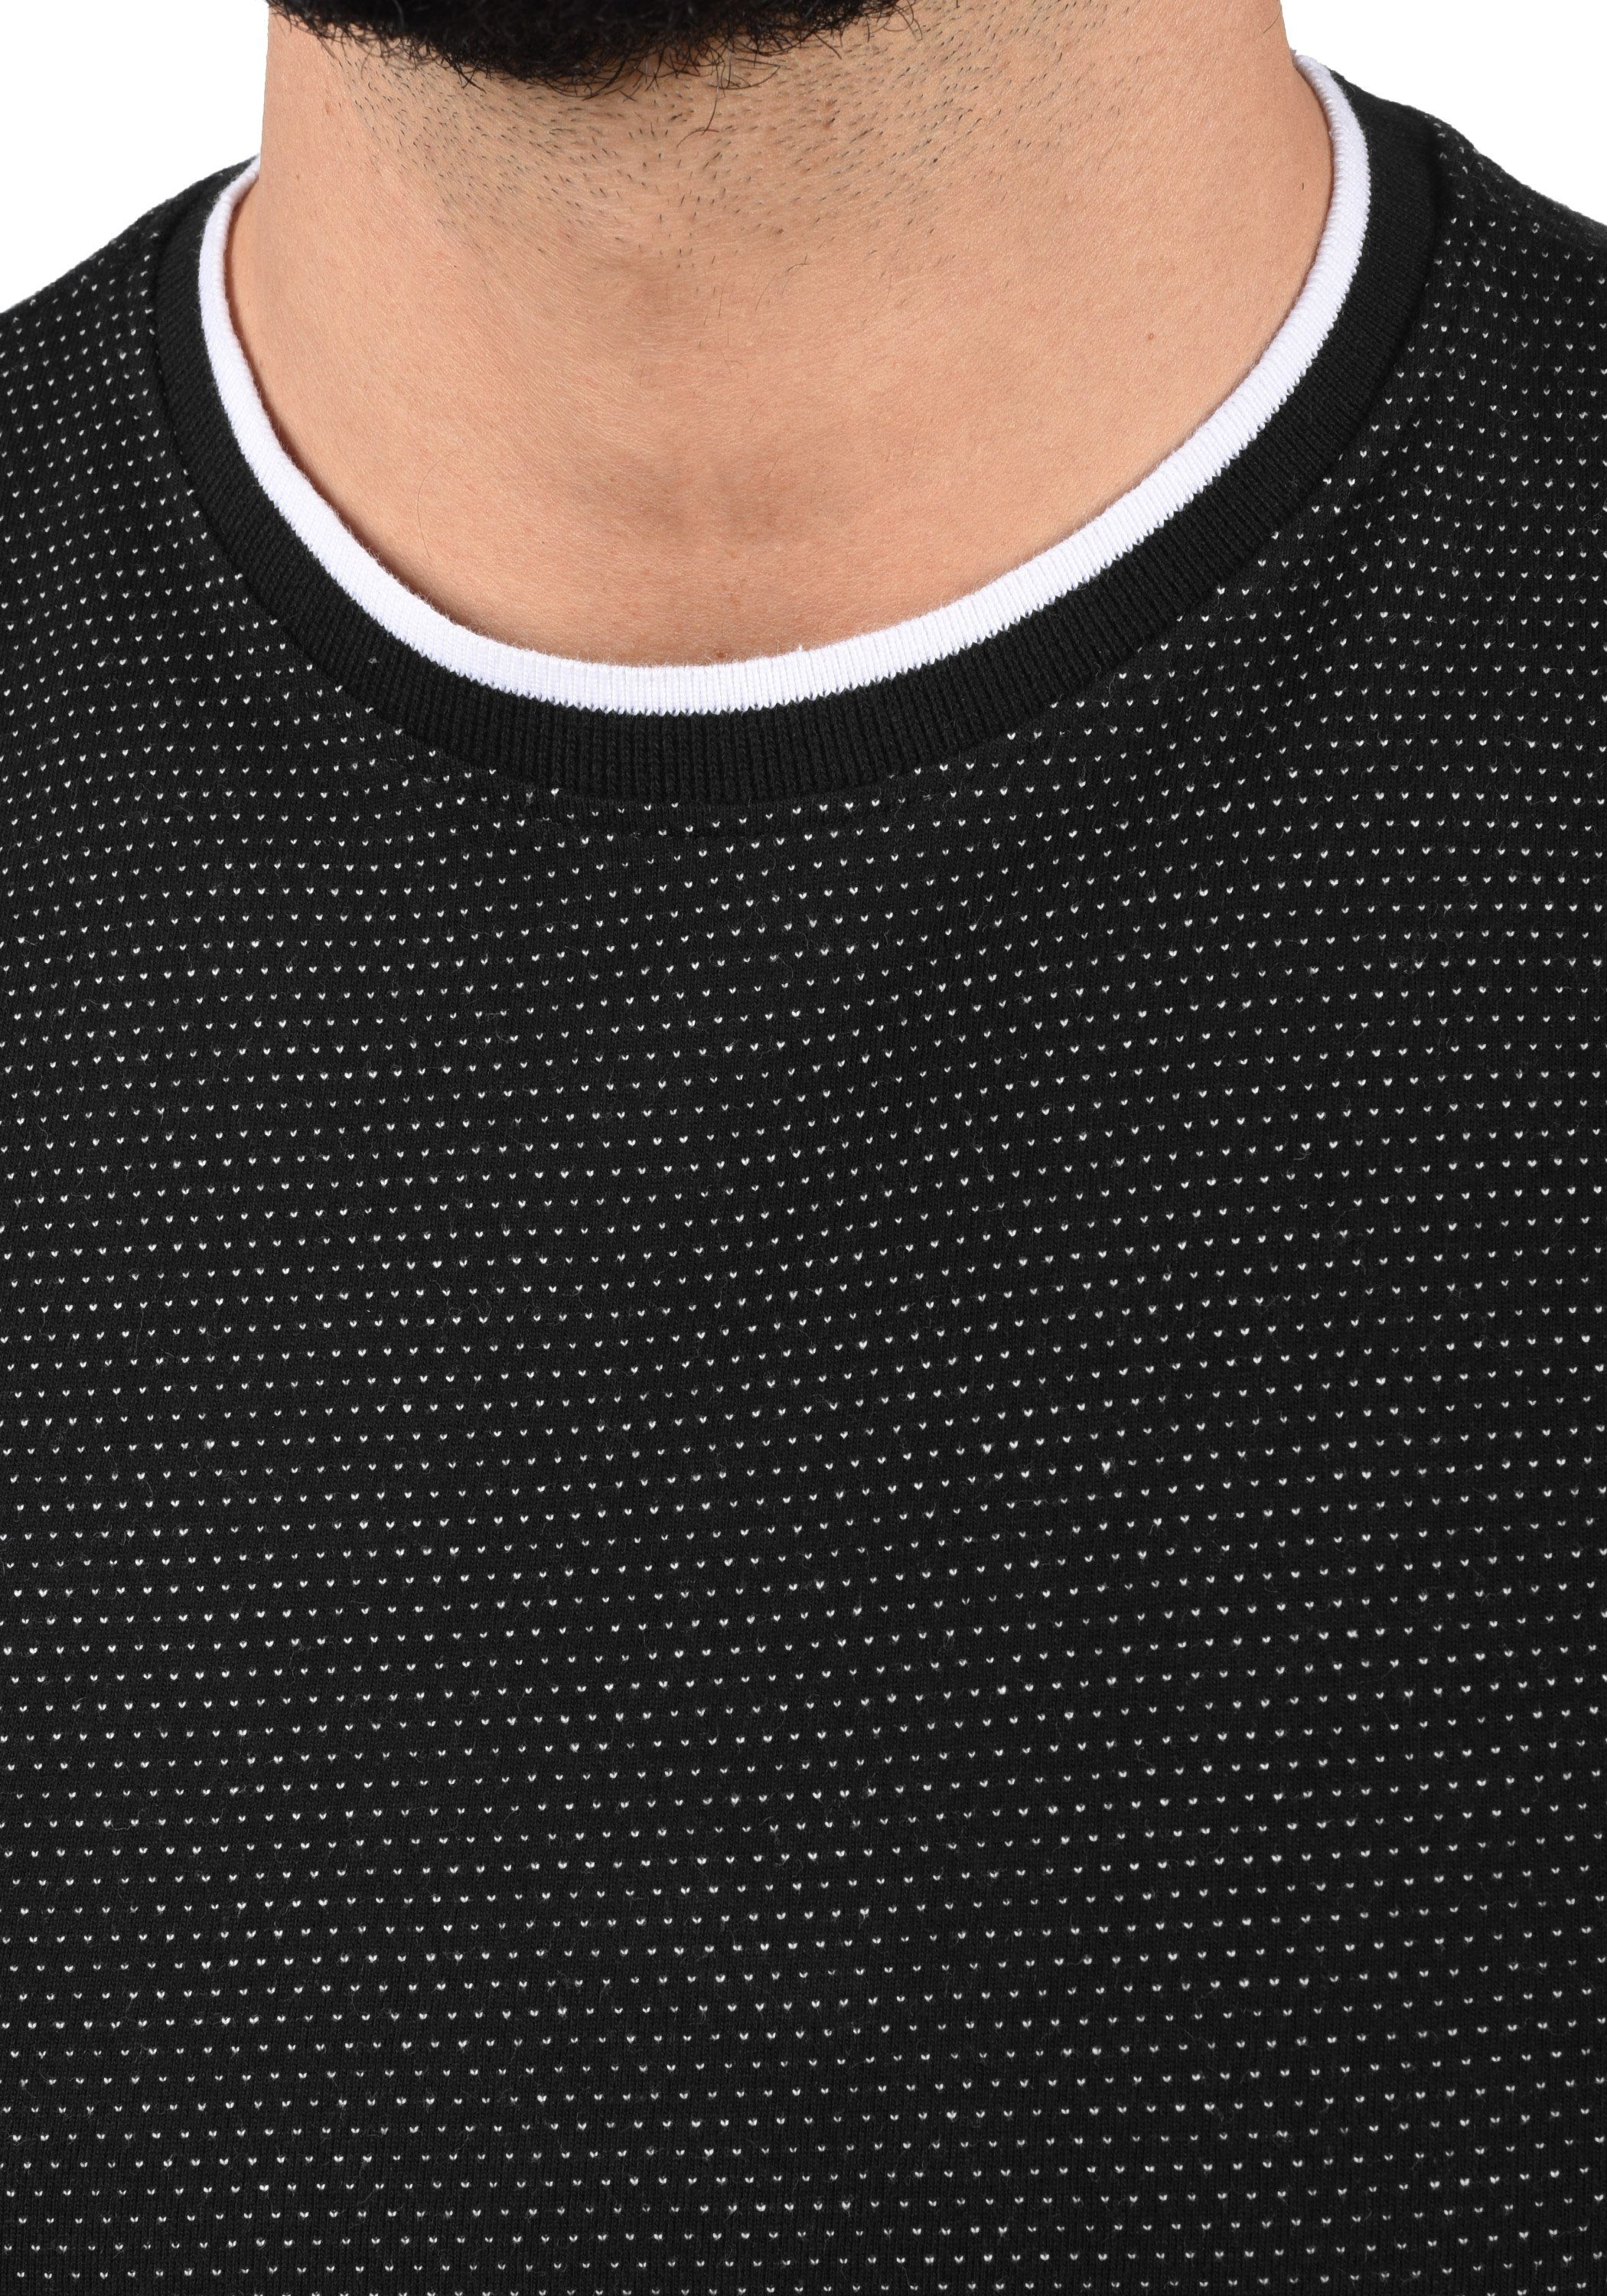 mit Black (9000) Kurzarmshirt !Solid Rundhalsshirt All-Over SDSaul Print